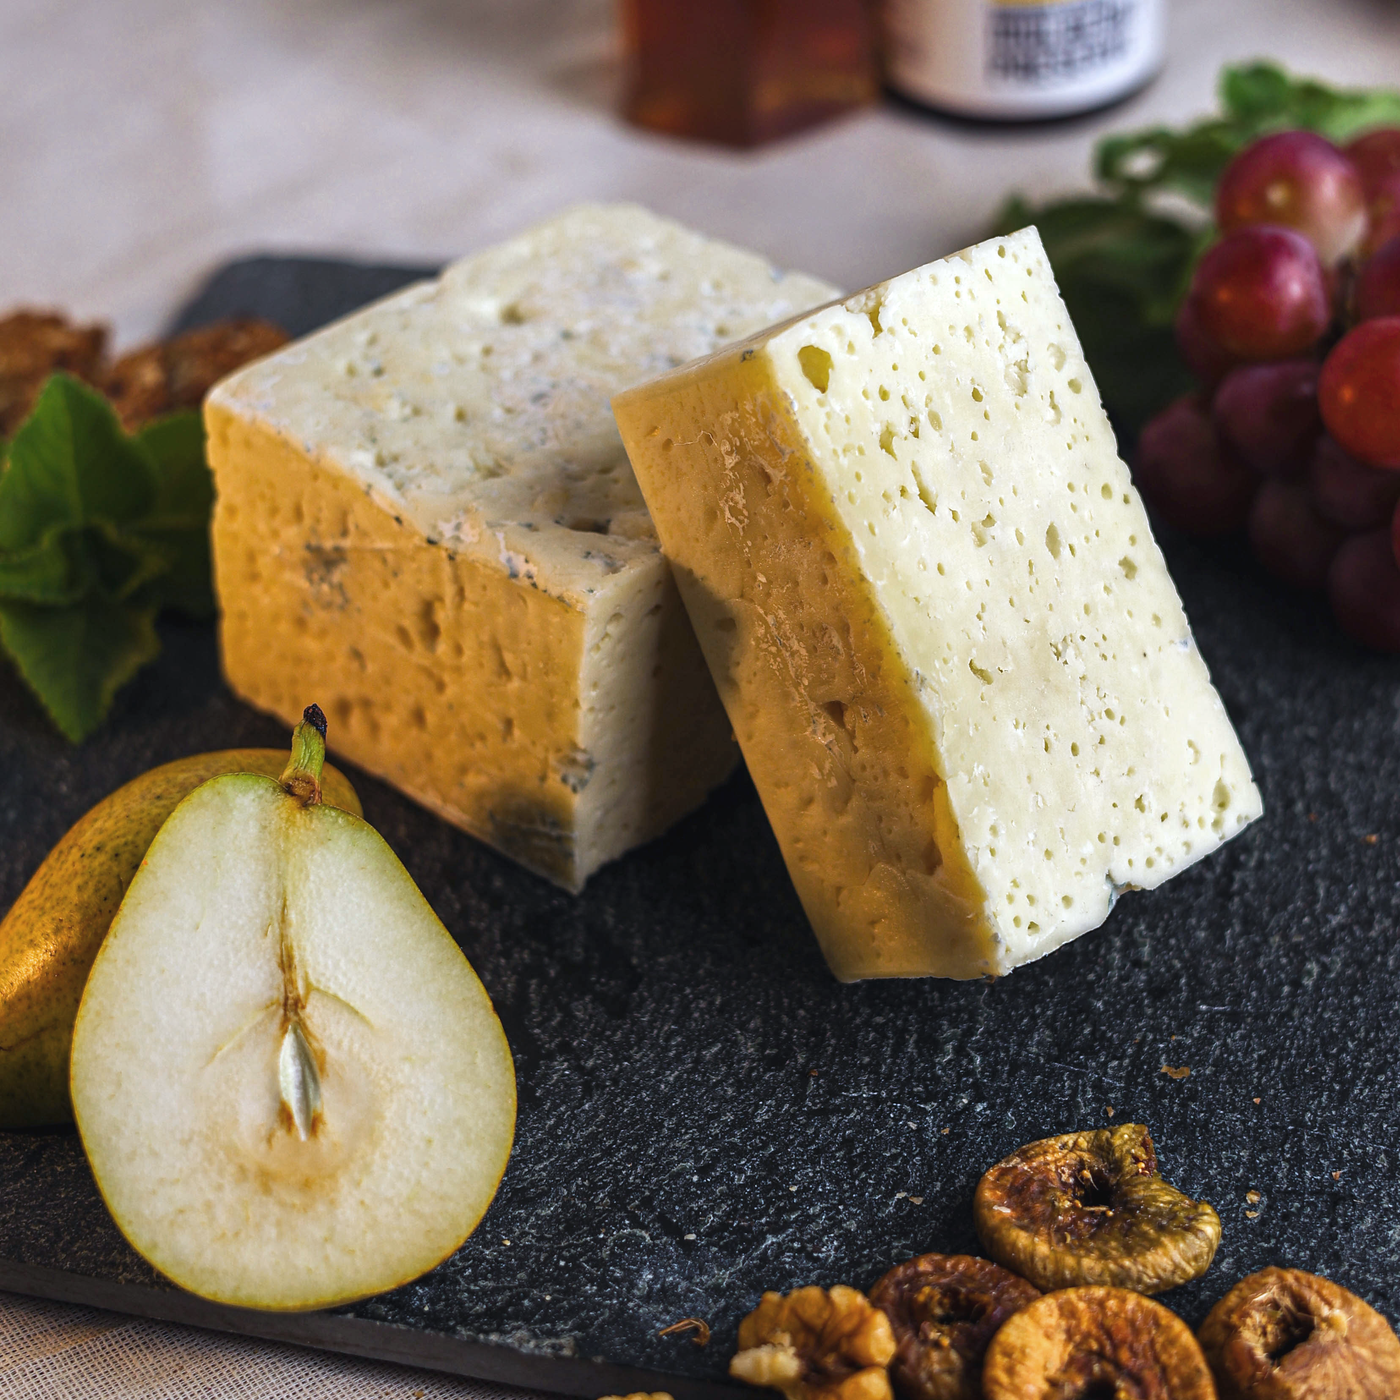 Käse Pecorino cheese is made from sheep milk from Gujarat, India